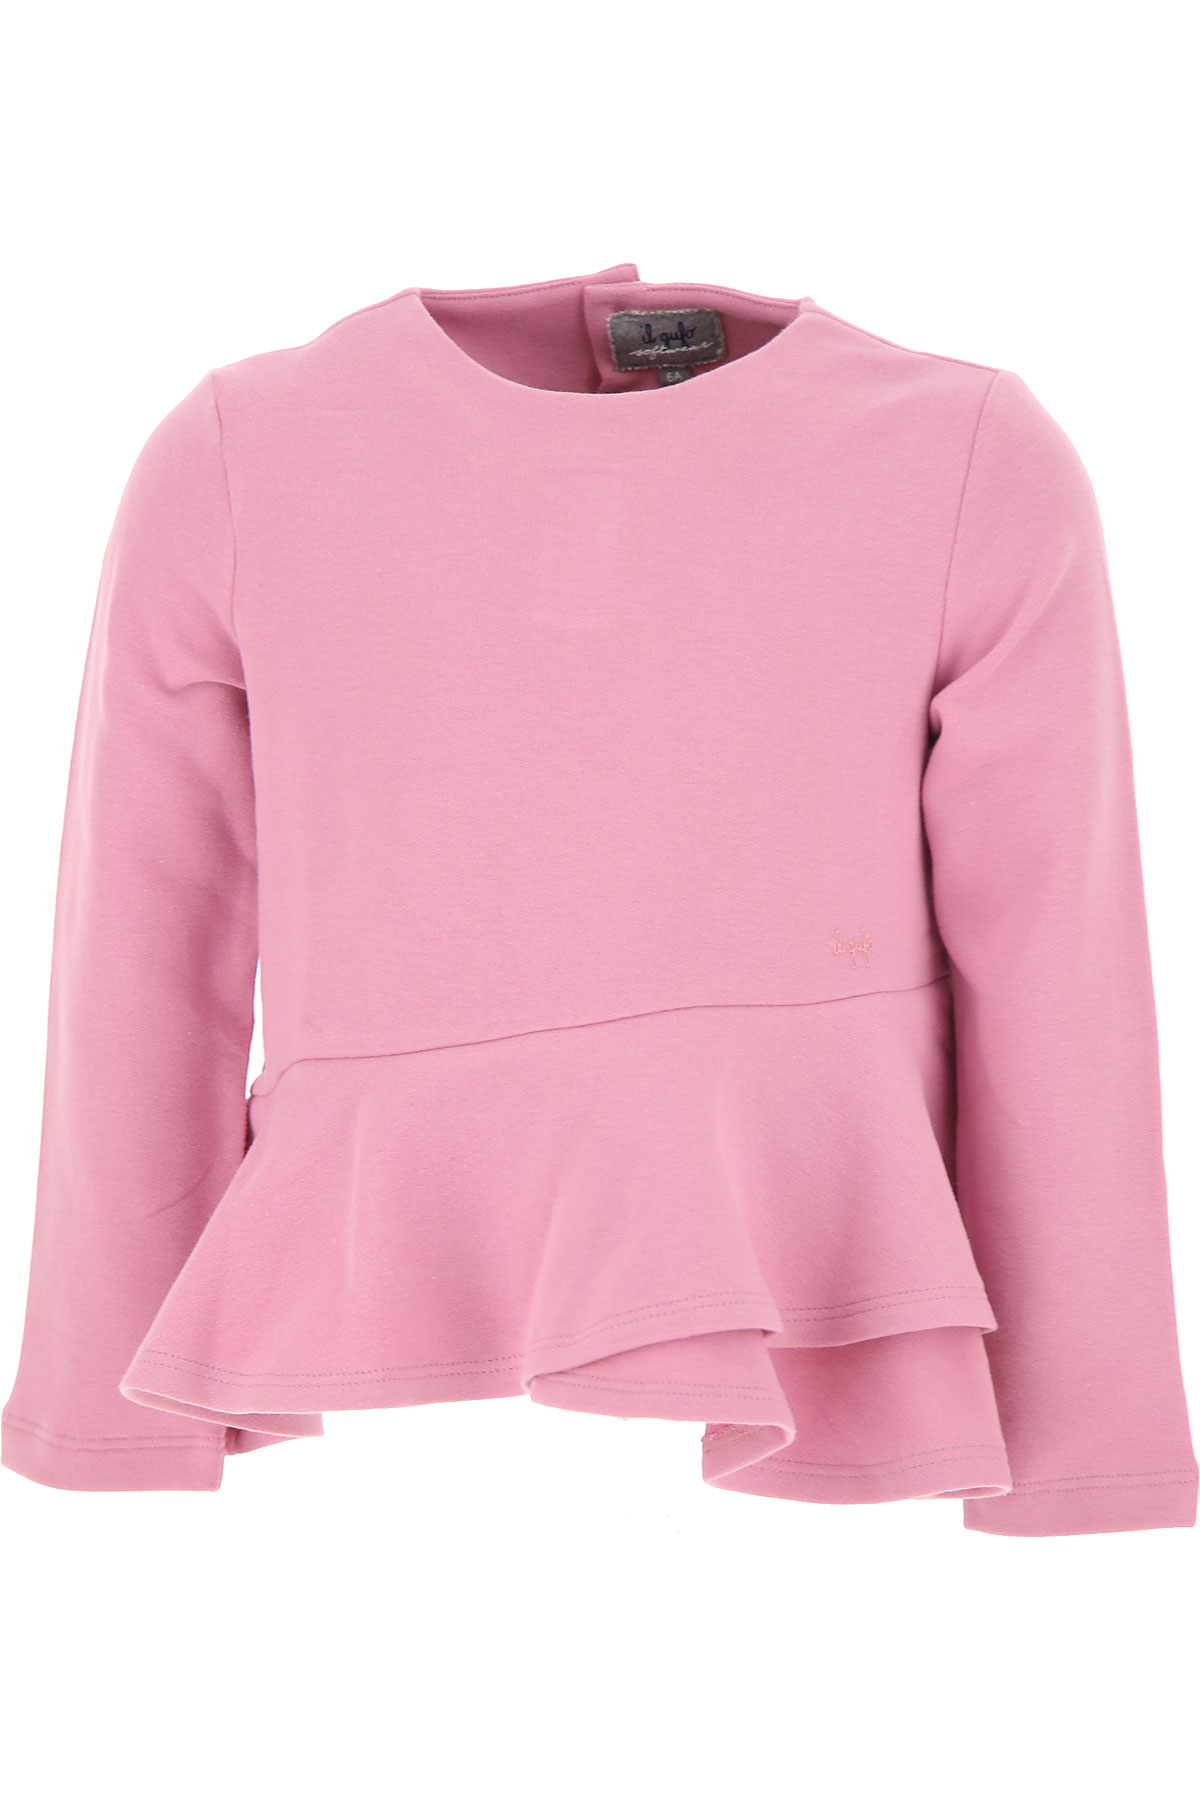 Il Gufo Kinder Sweatshirt & Kapuzenpullover für Mädchen Günstig im Sale, Pink, Baumwolle, 2017, 10Y 2Y 3Y 4Y 5Y 8Y